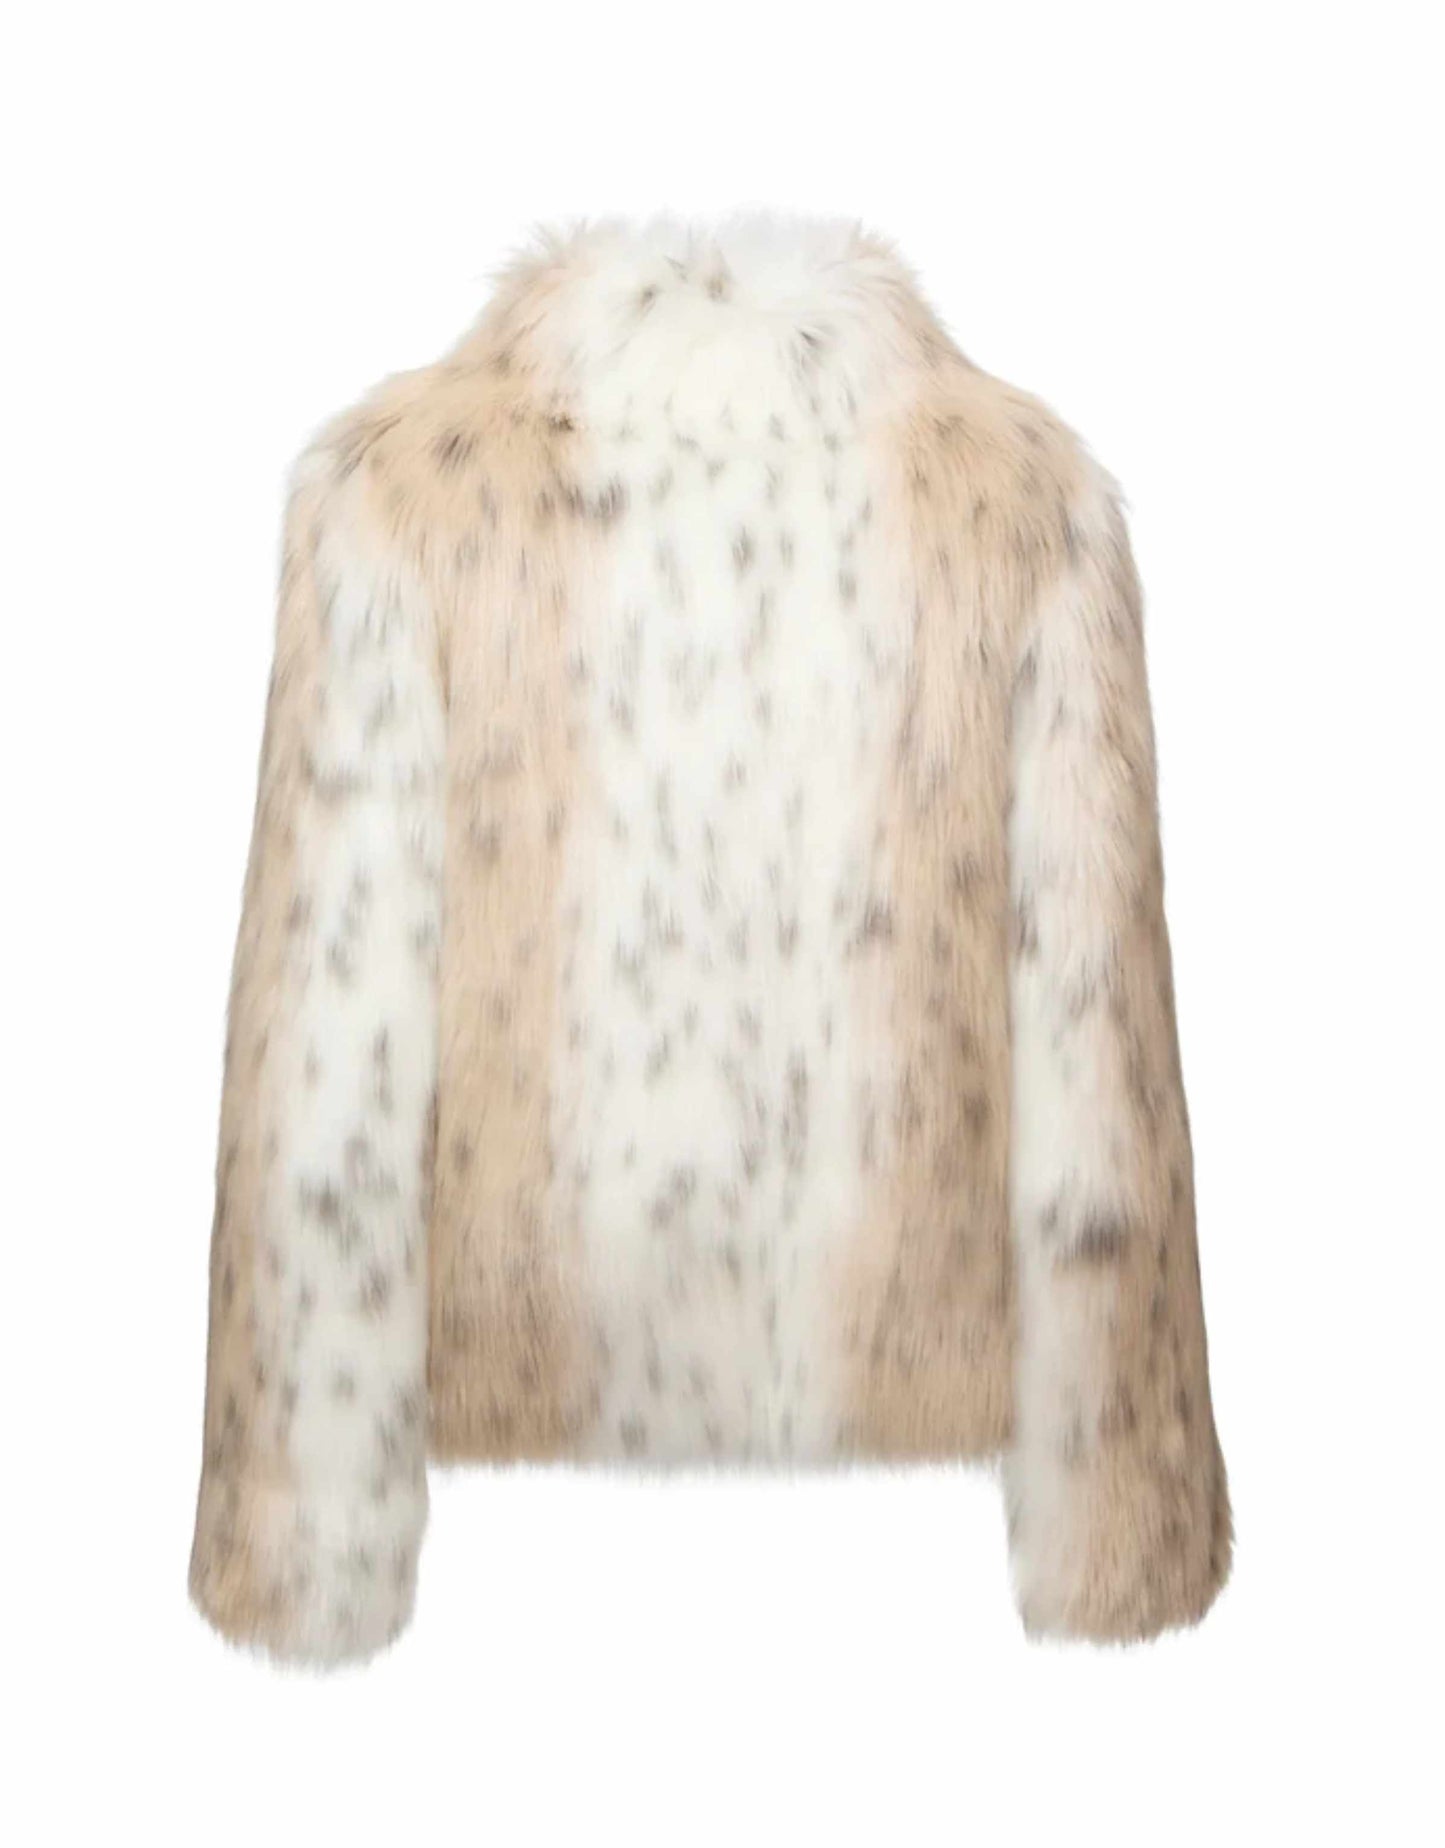 Unreal Fur - Wild Dream Jacket, Snow Leopard